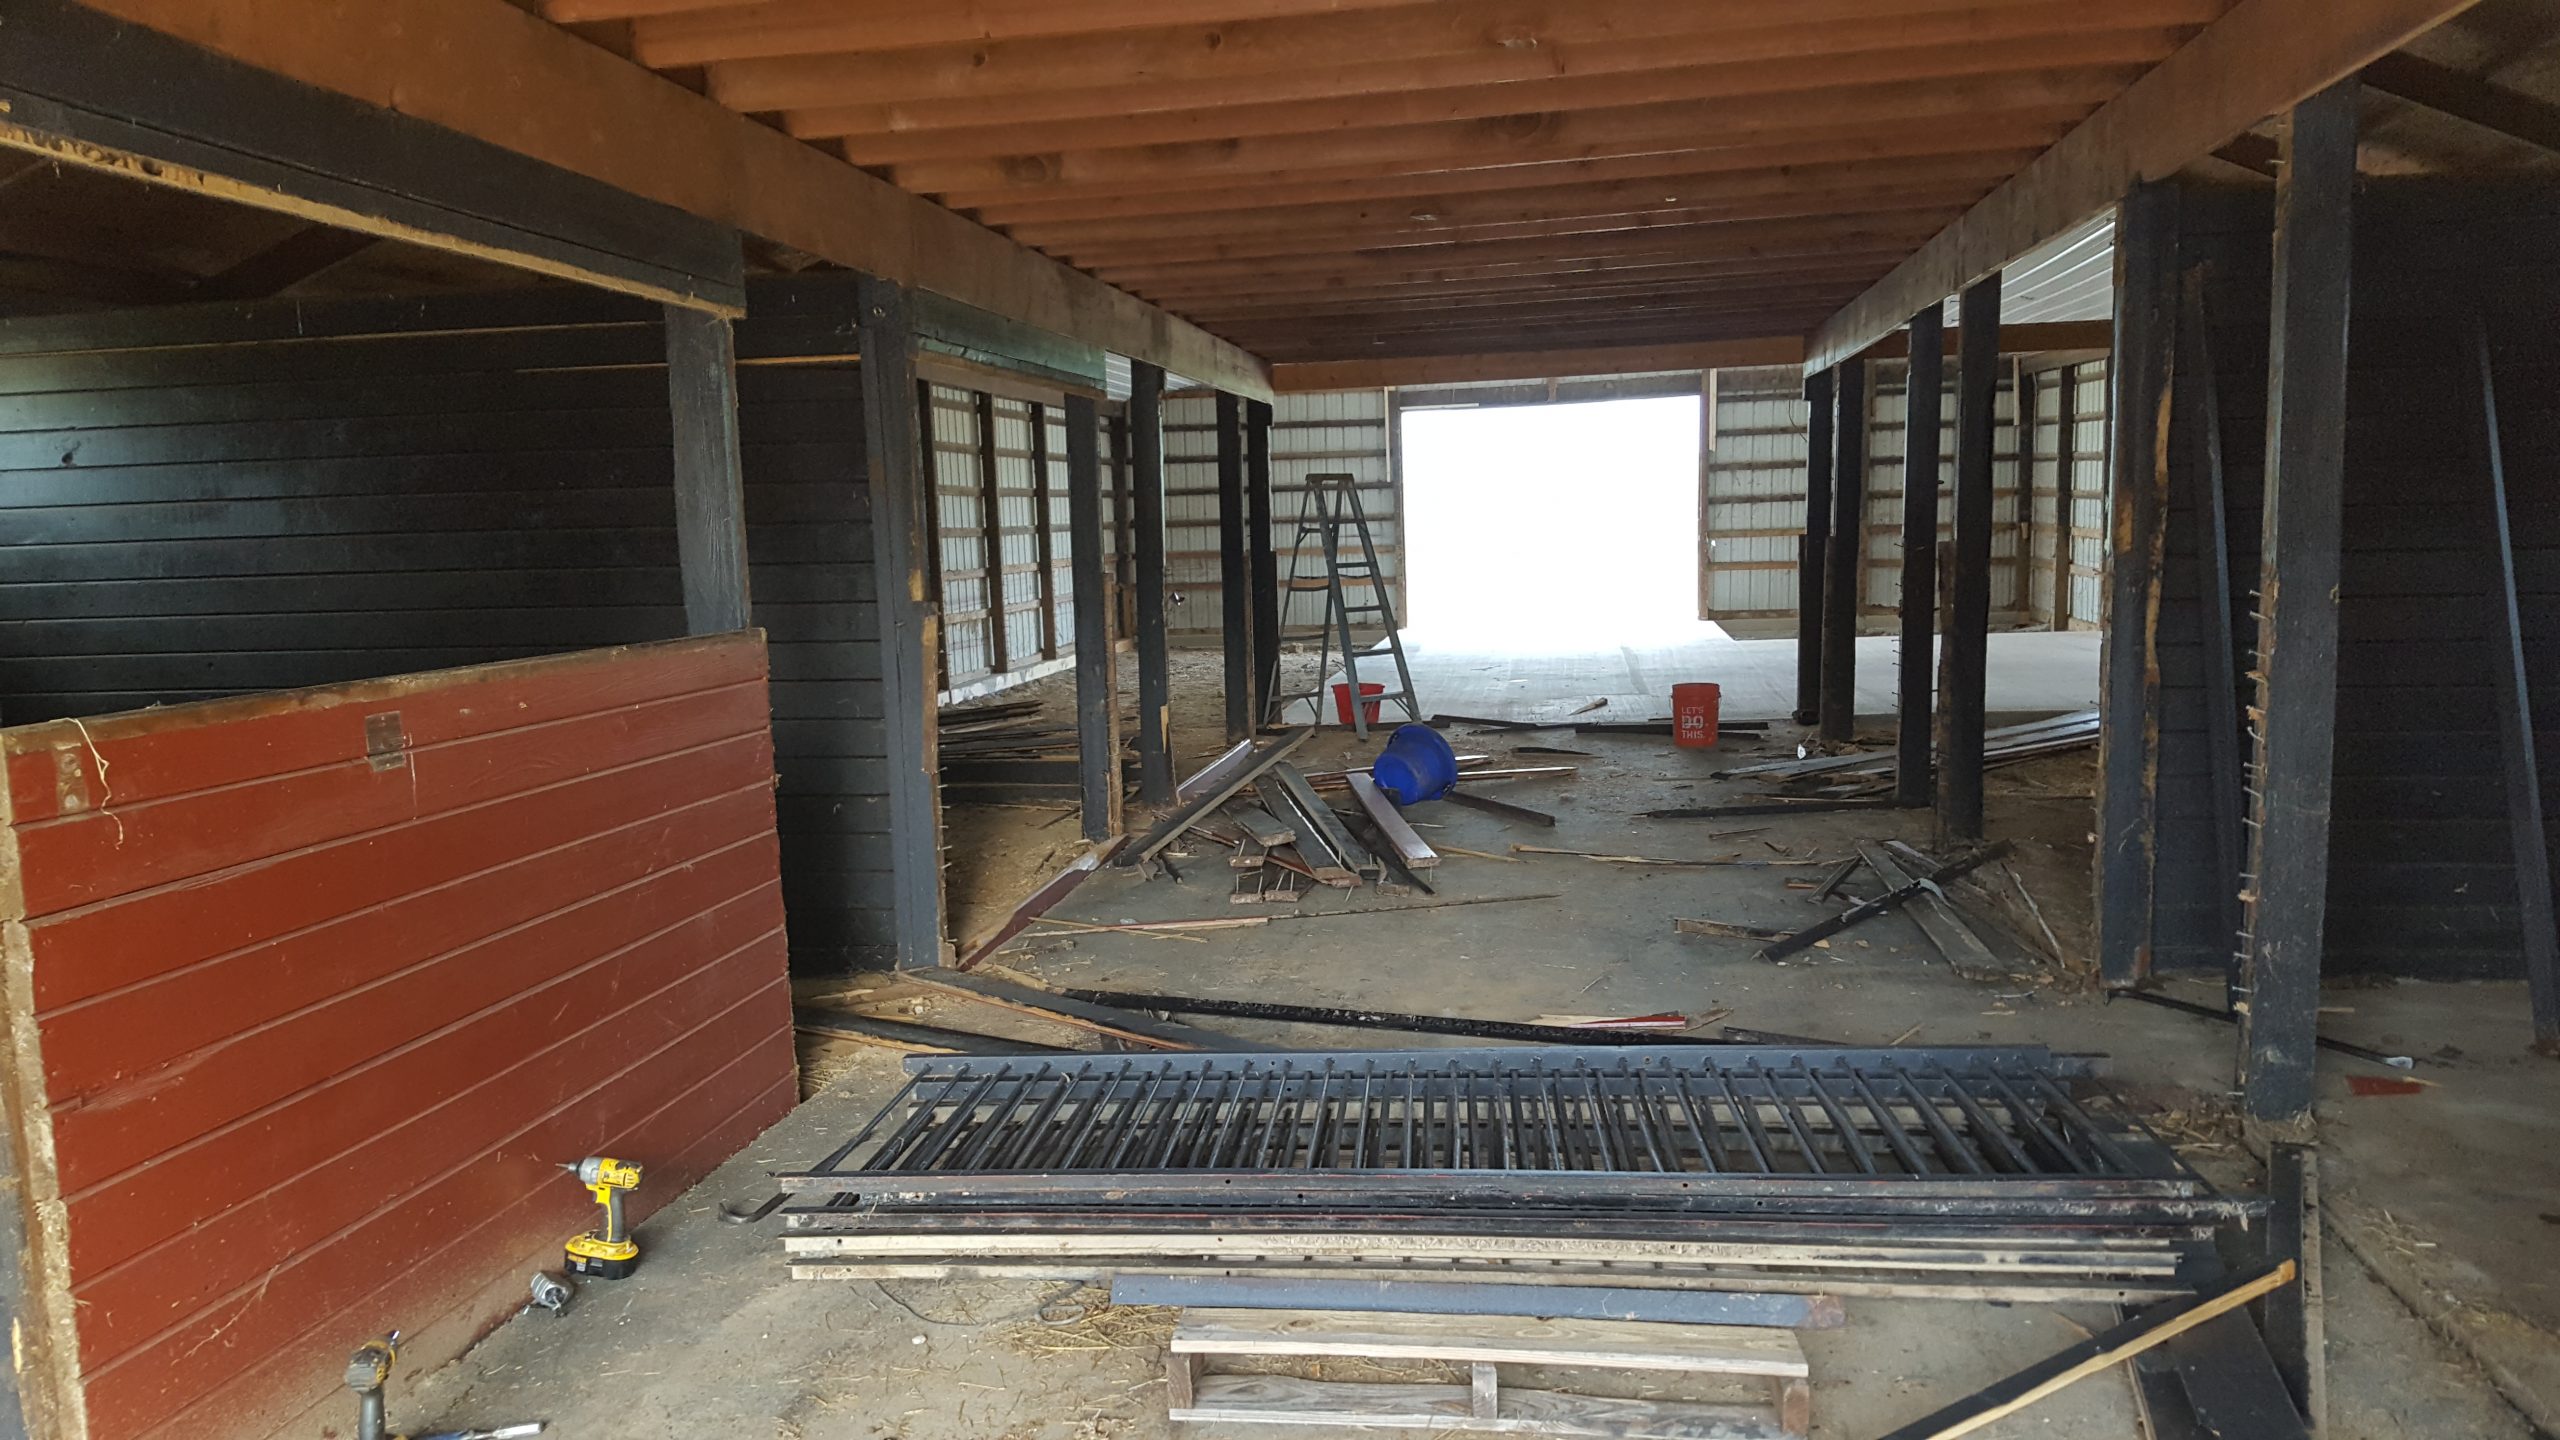 Horse barn aisle during renovation